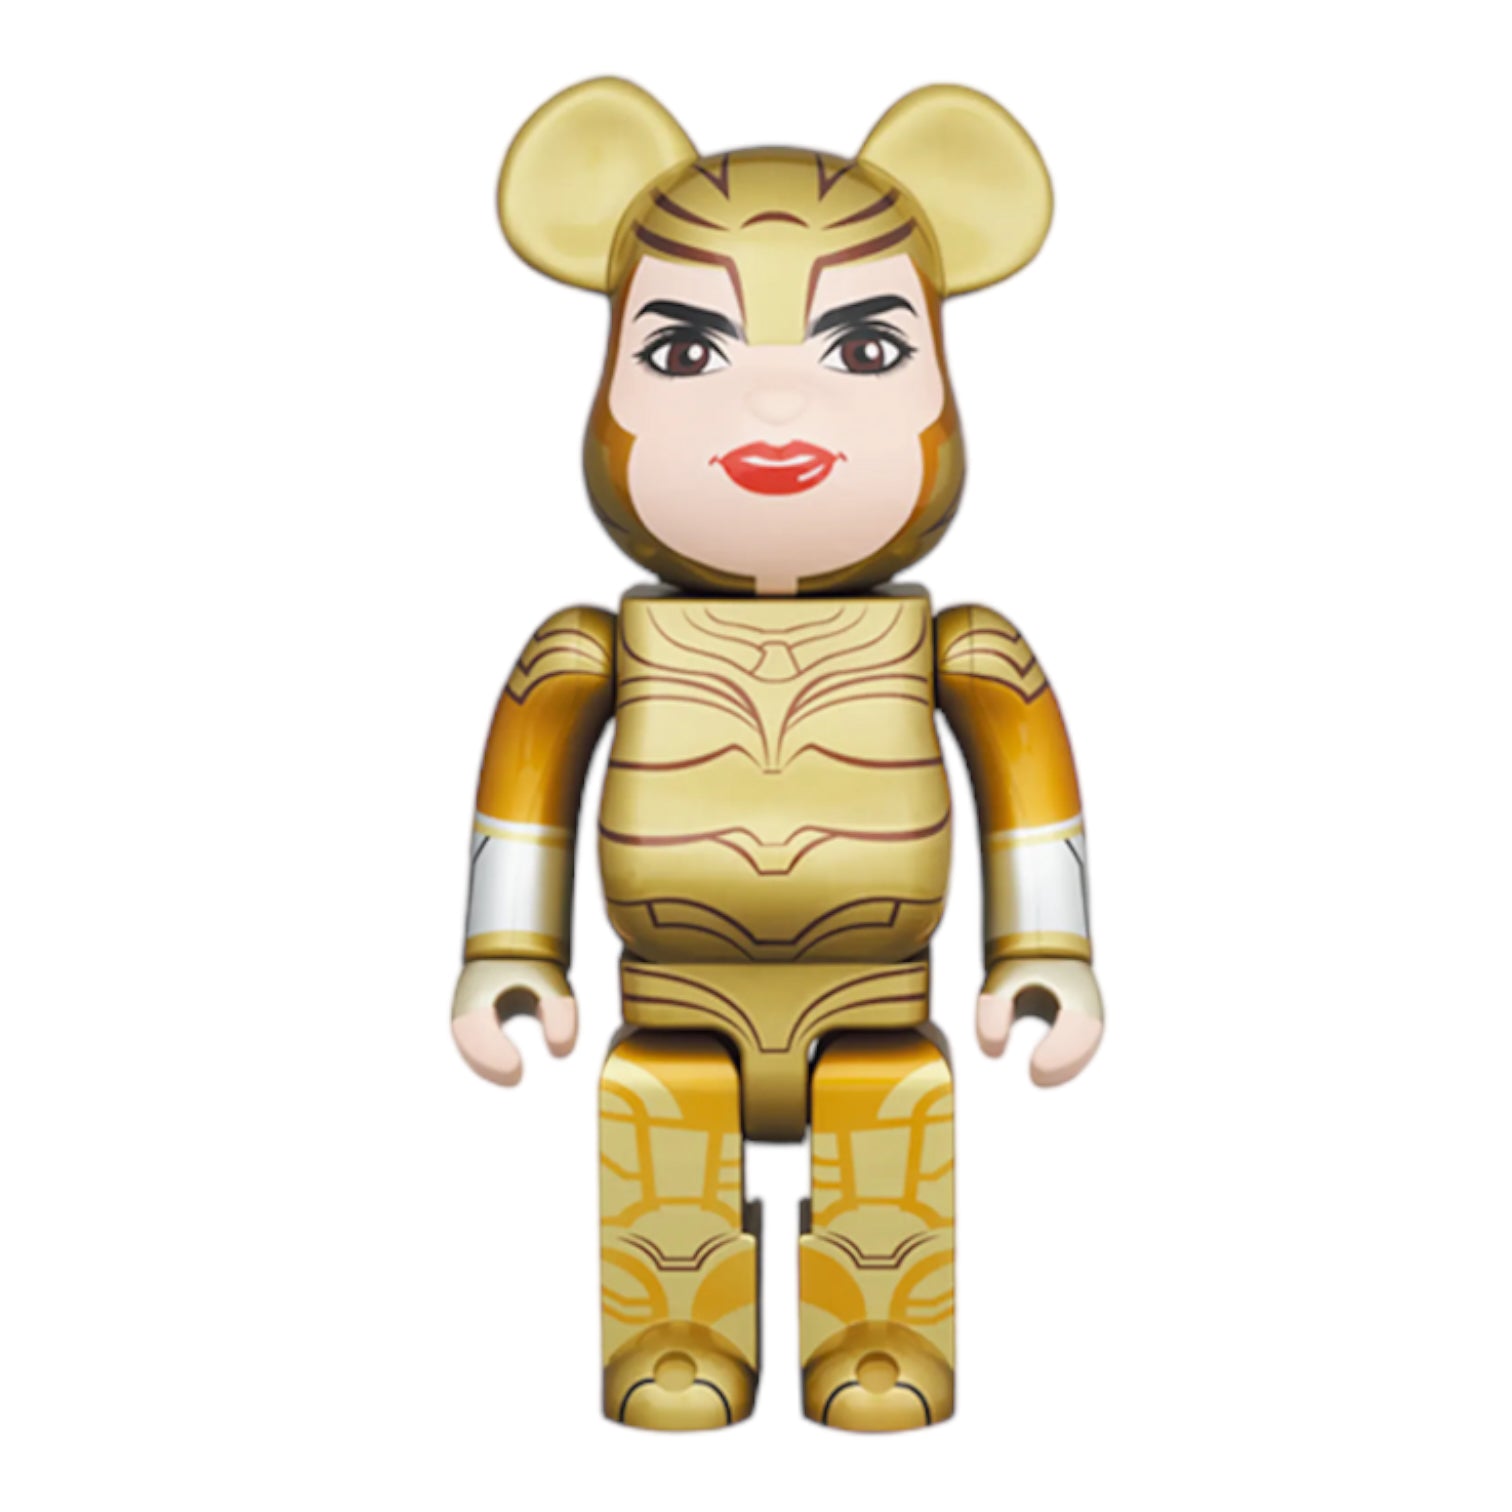 Bearbrick Wonder Woman Golden Armor 400% - Gold Collectible Figurine